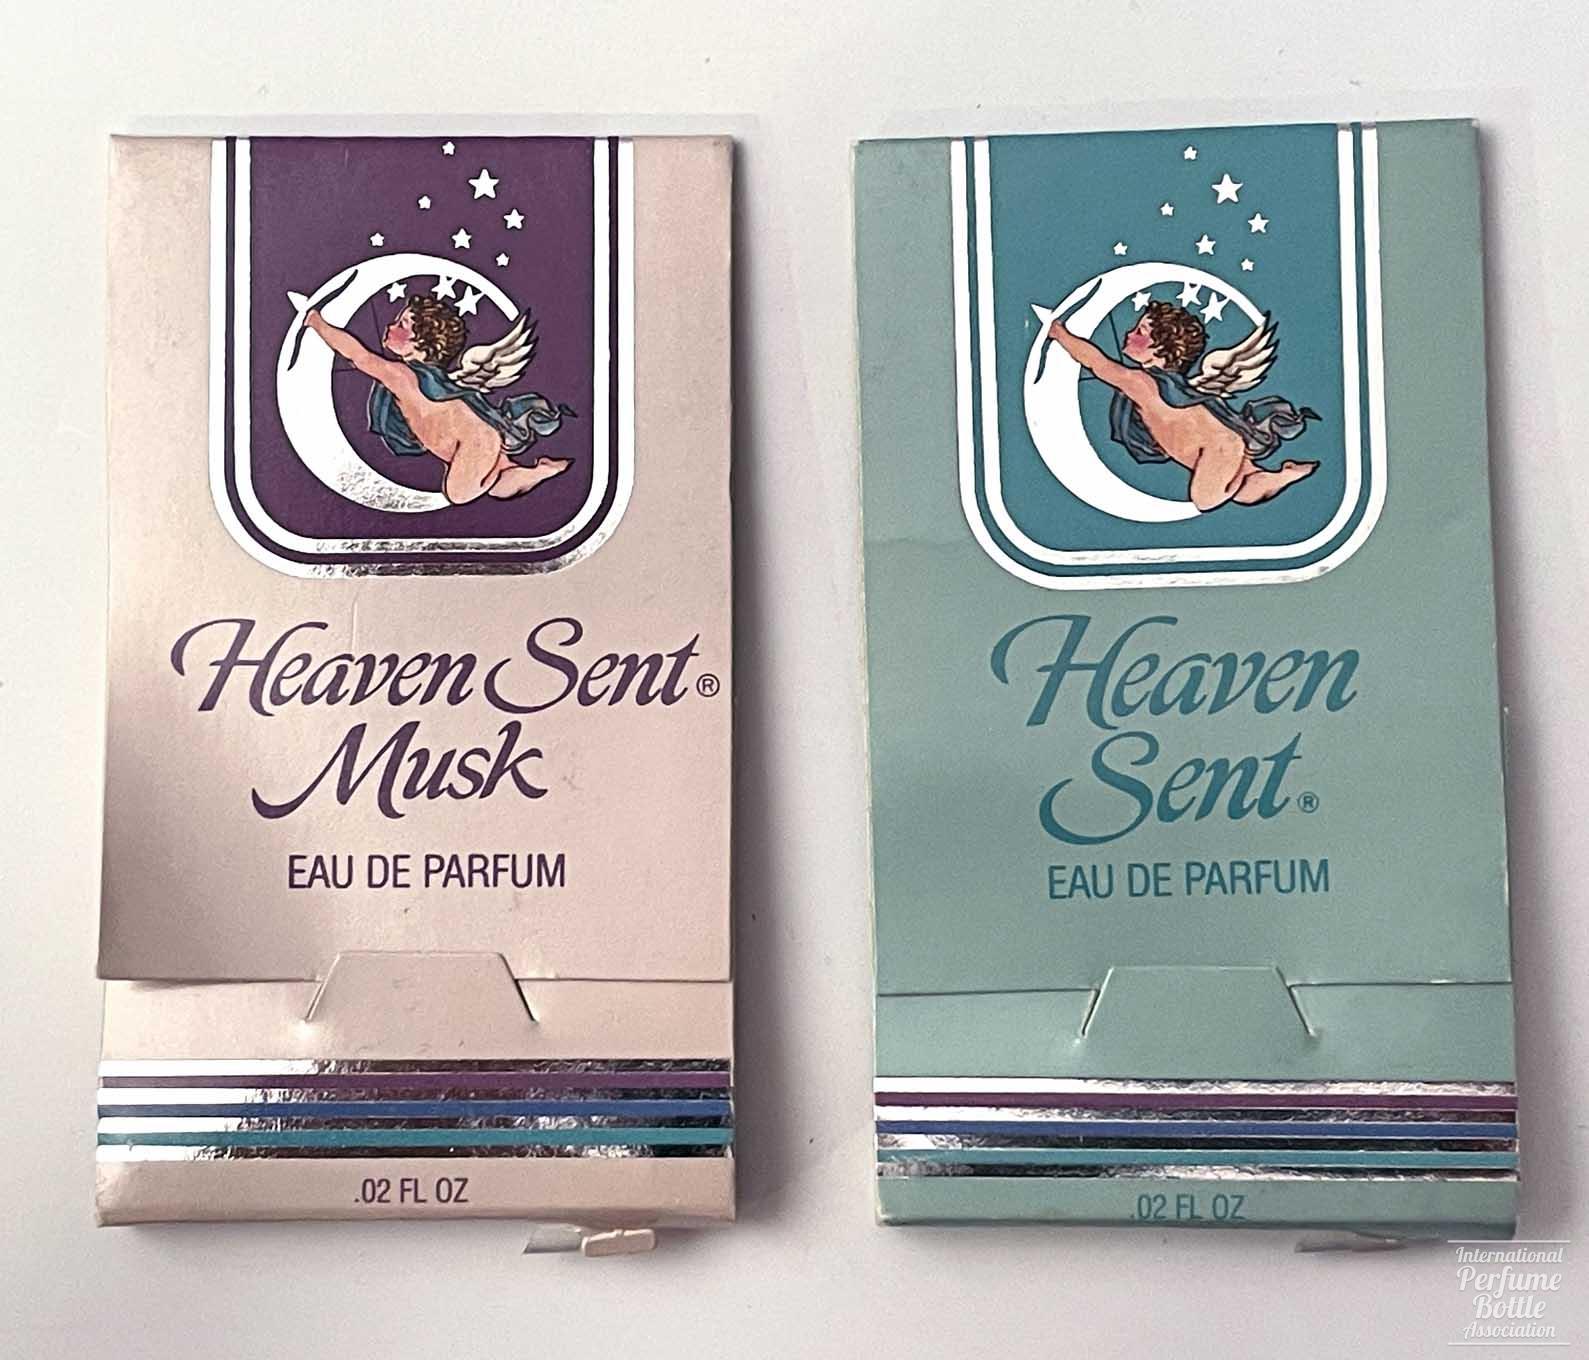 "Heaven Sent" Samples by Helena Rubinstein (Mem)